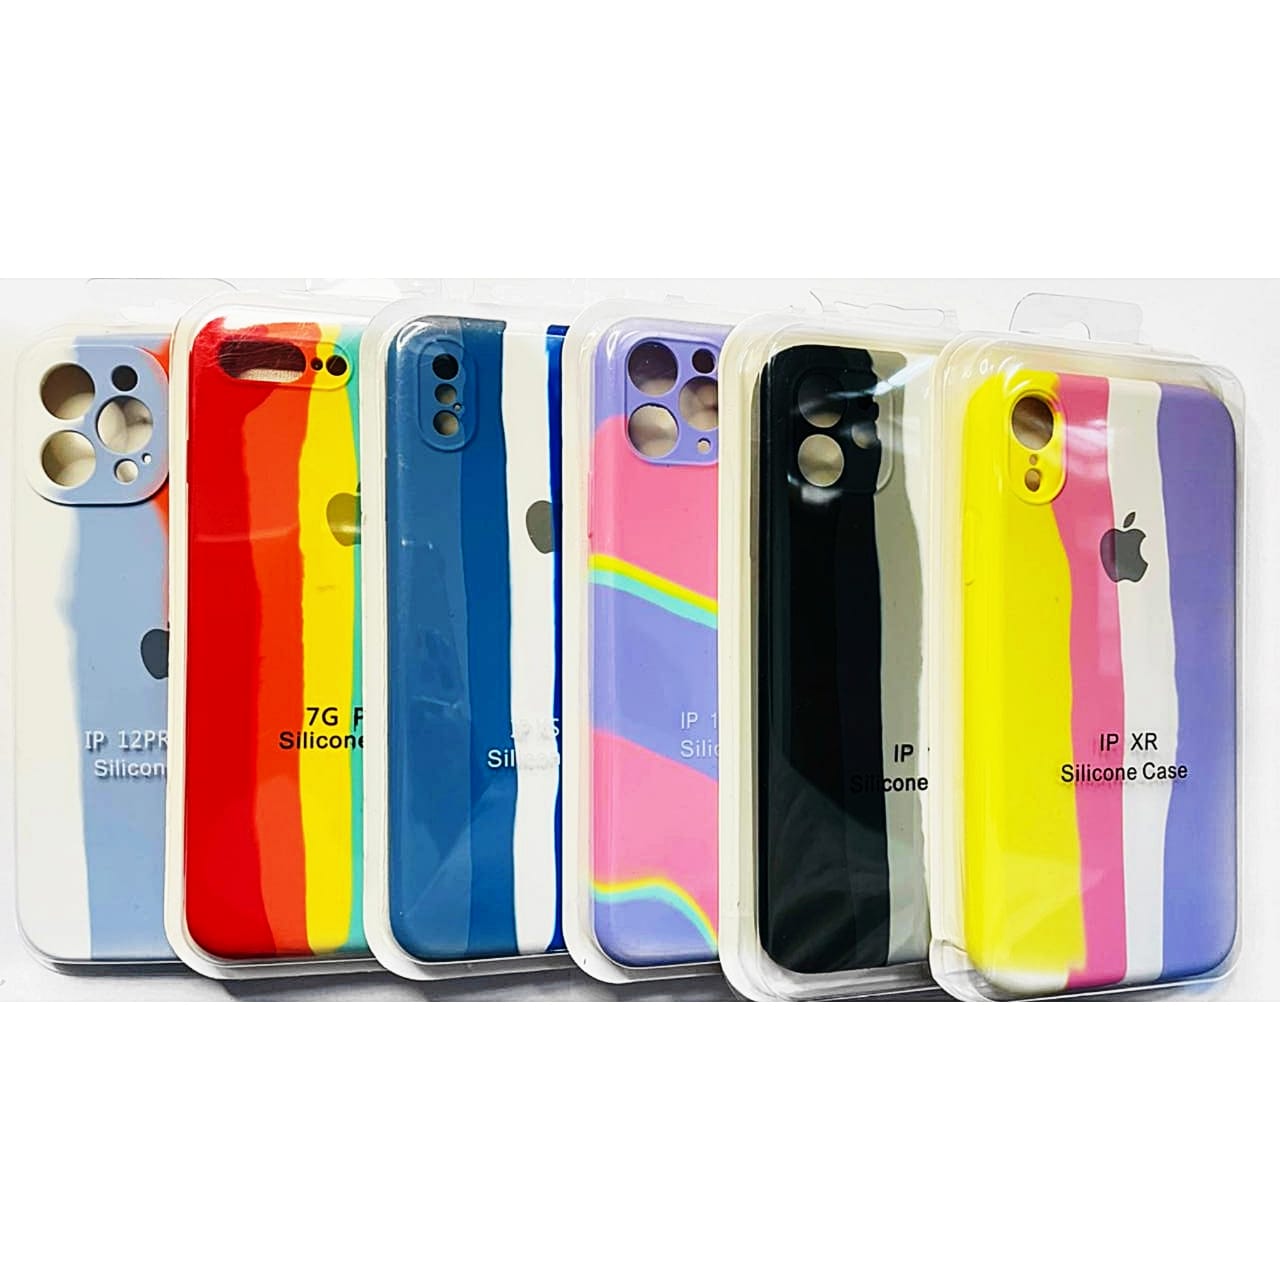 Capa Case Original Iphone XR Cores Pasteis  - Capinhas para Celular - Diversas cores - Central - unidade            Cod. CP IP XR PASTEIS 